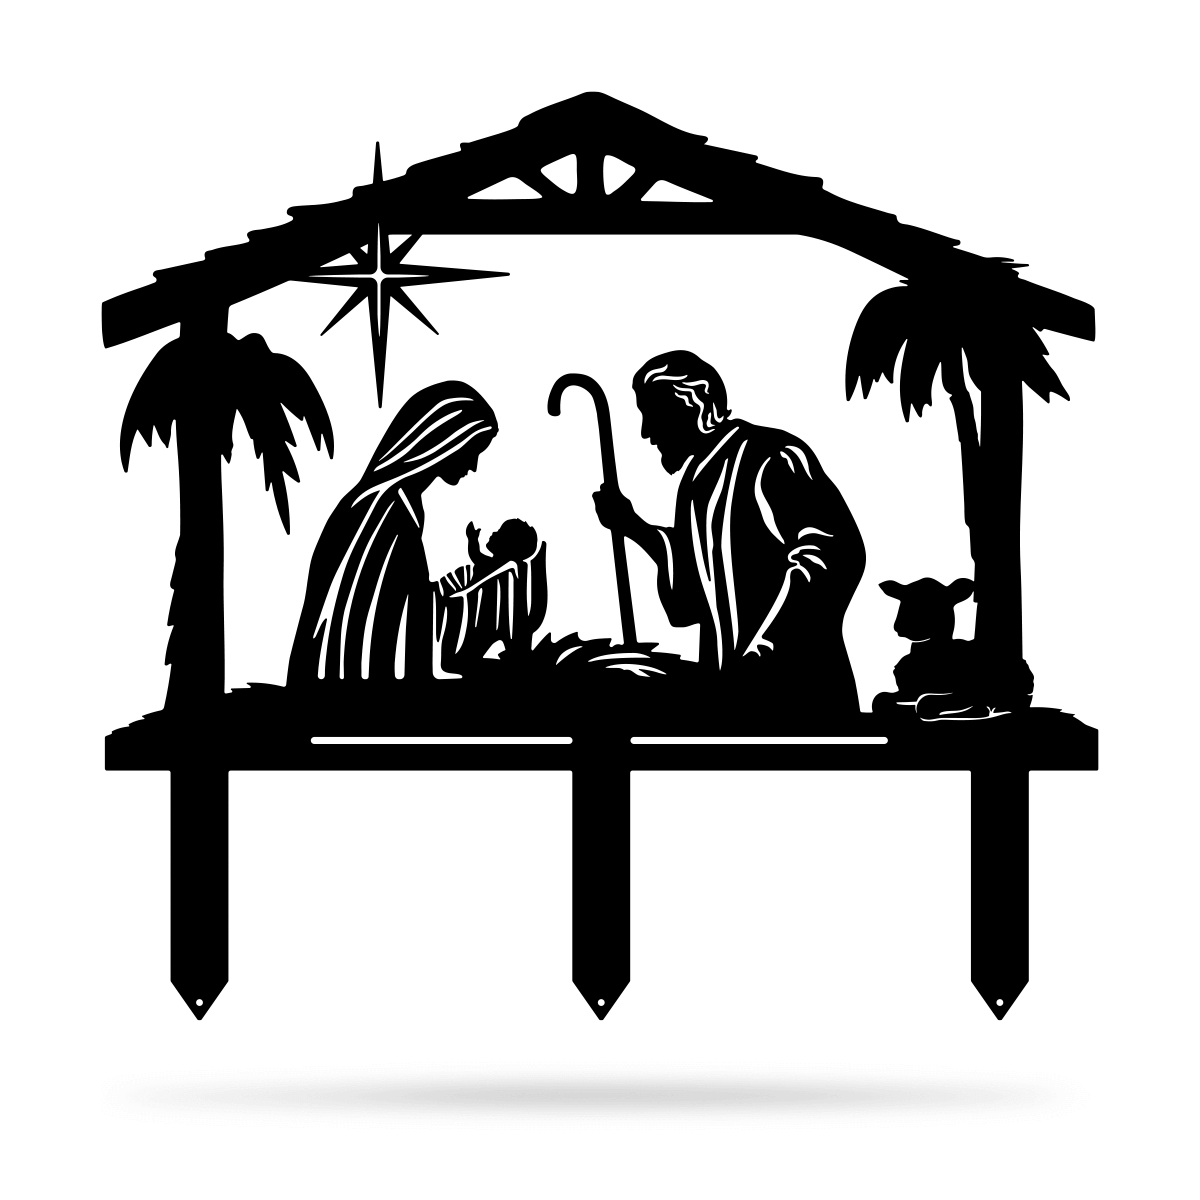 nativity clip art